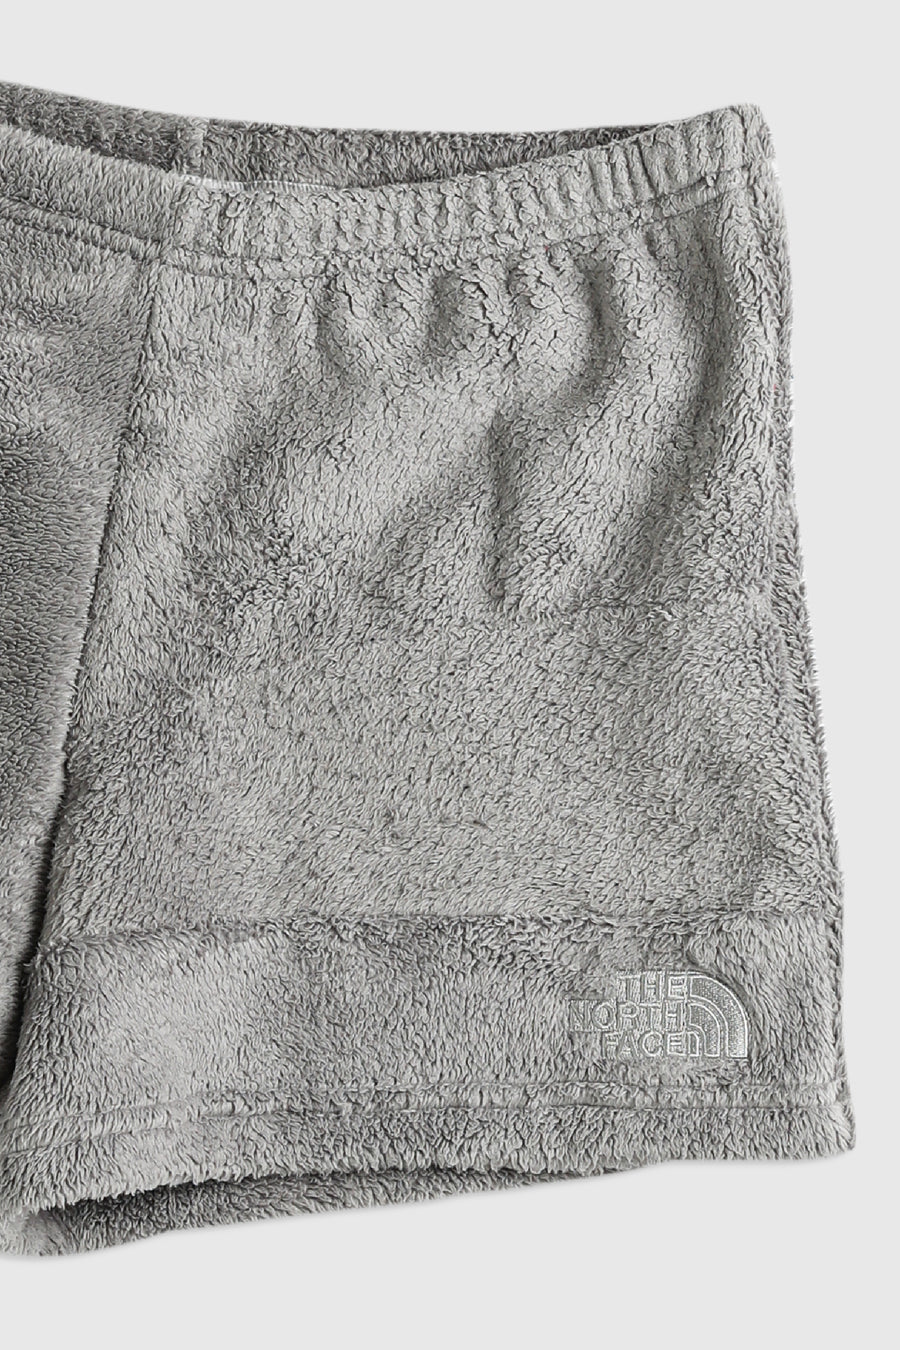 Rework North Face Fuzzy Shorts - M